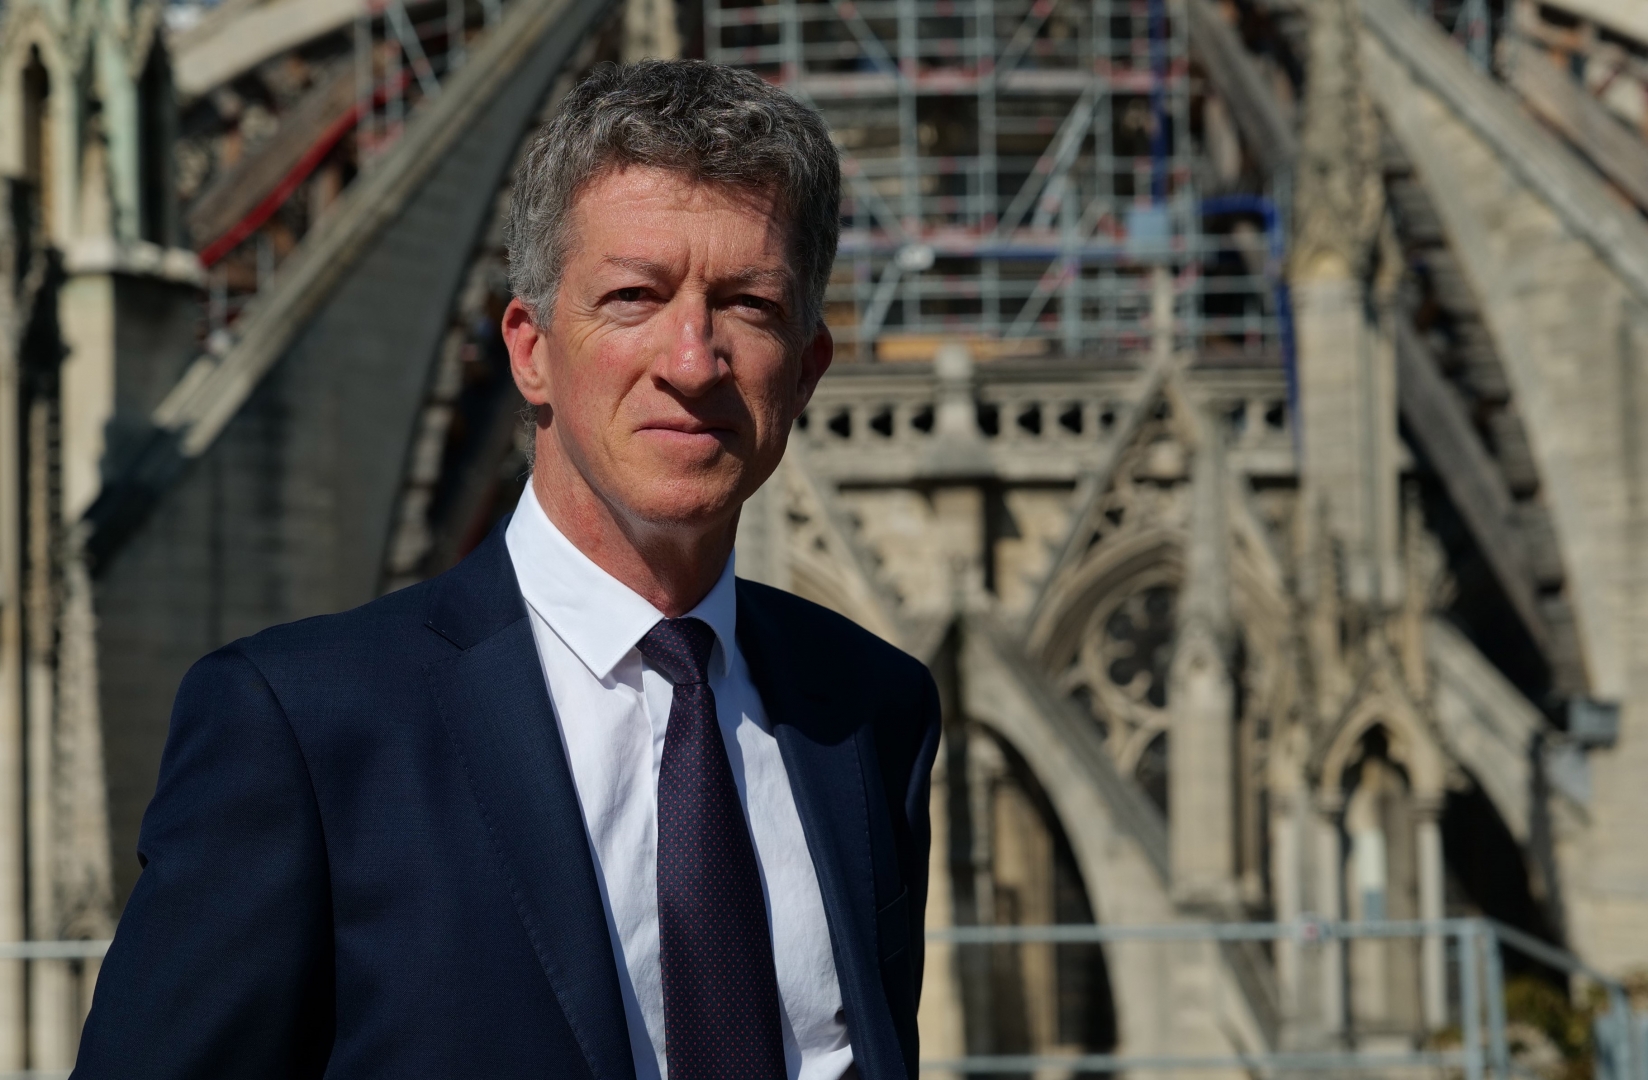 "Rebuilding Notre-Dame de Paris": Philippe Jost succeeds General Georgelin